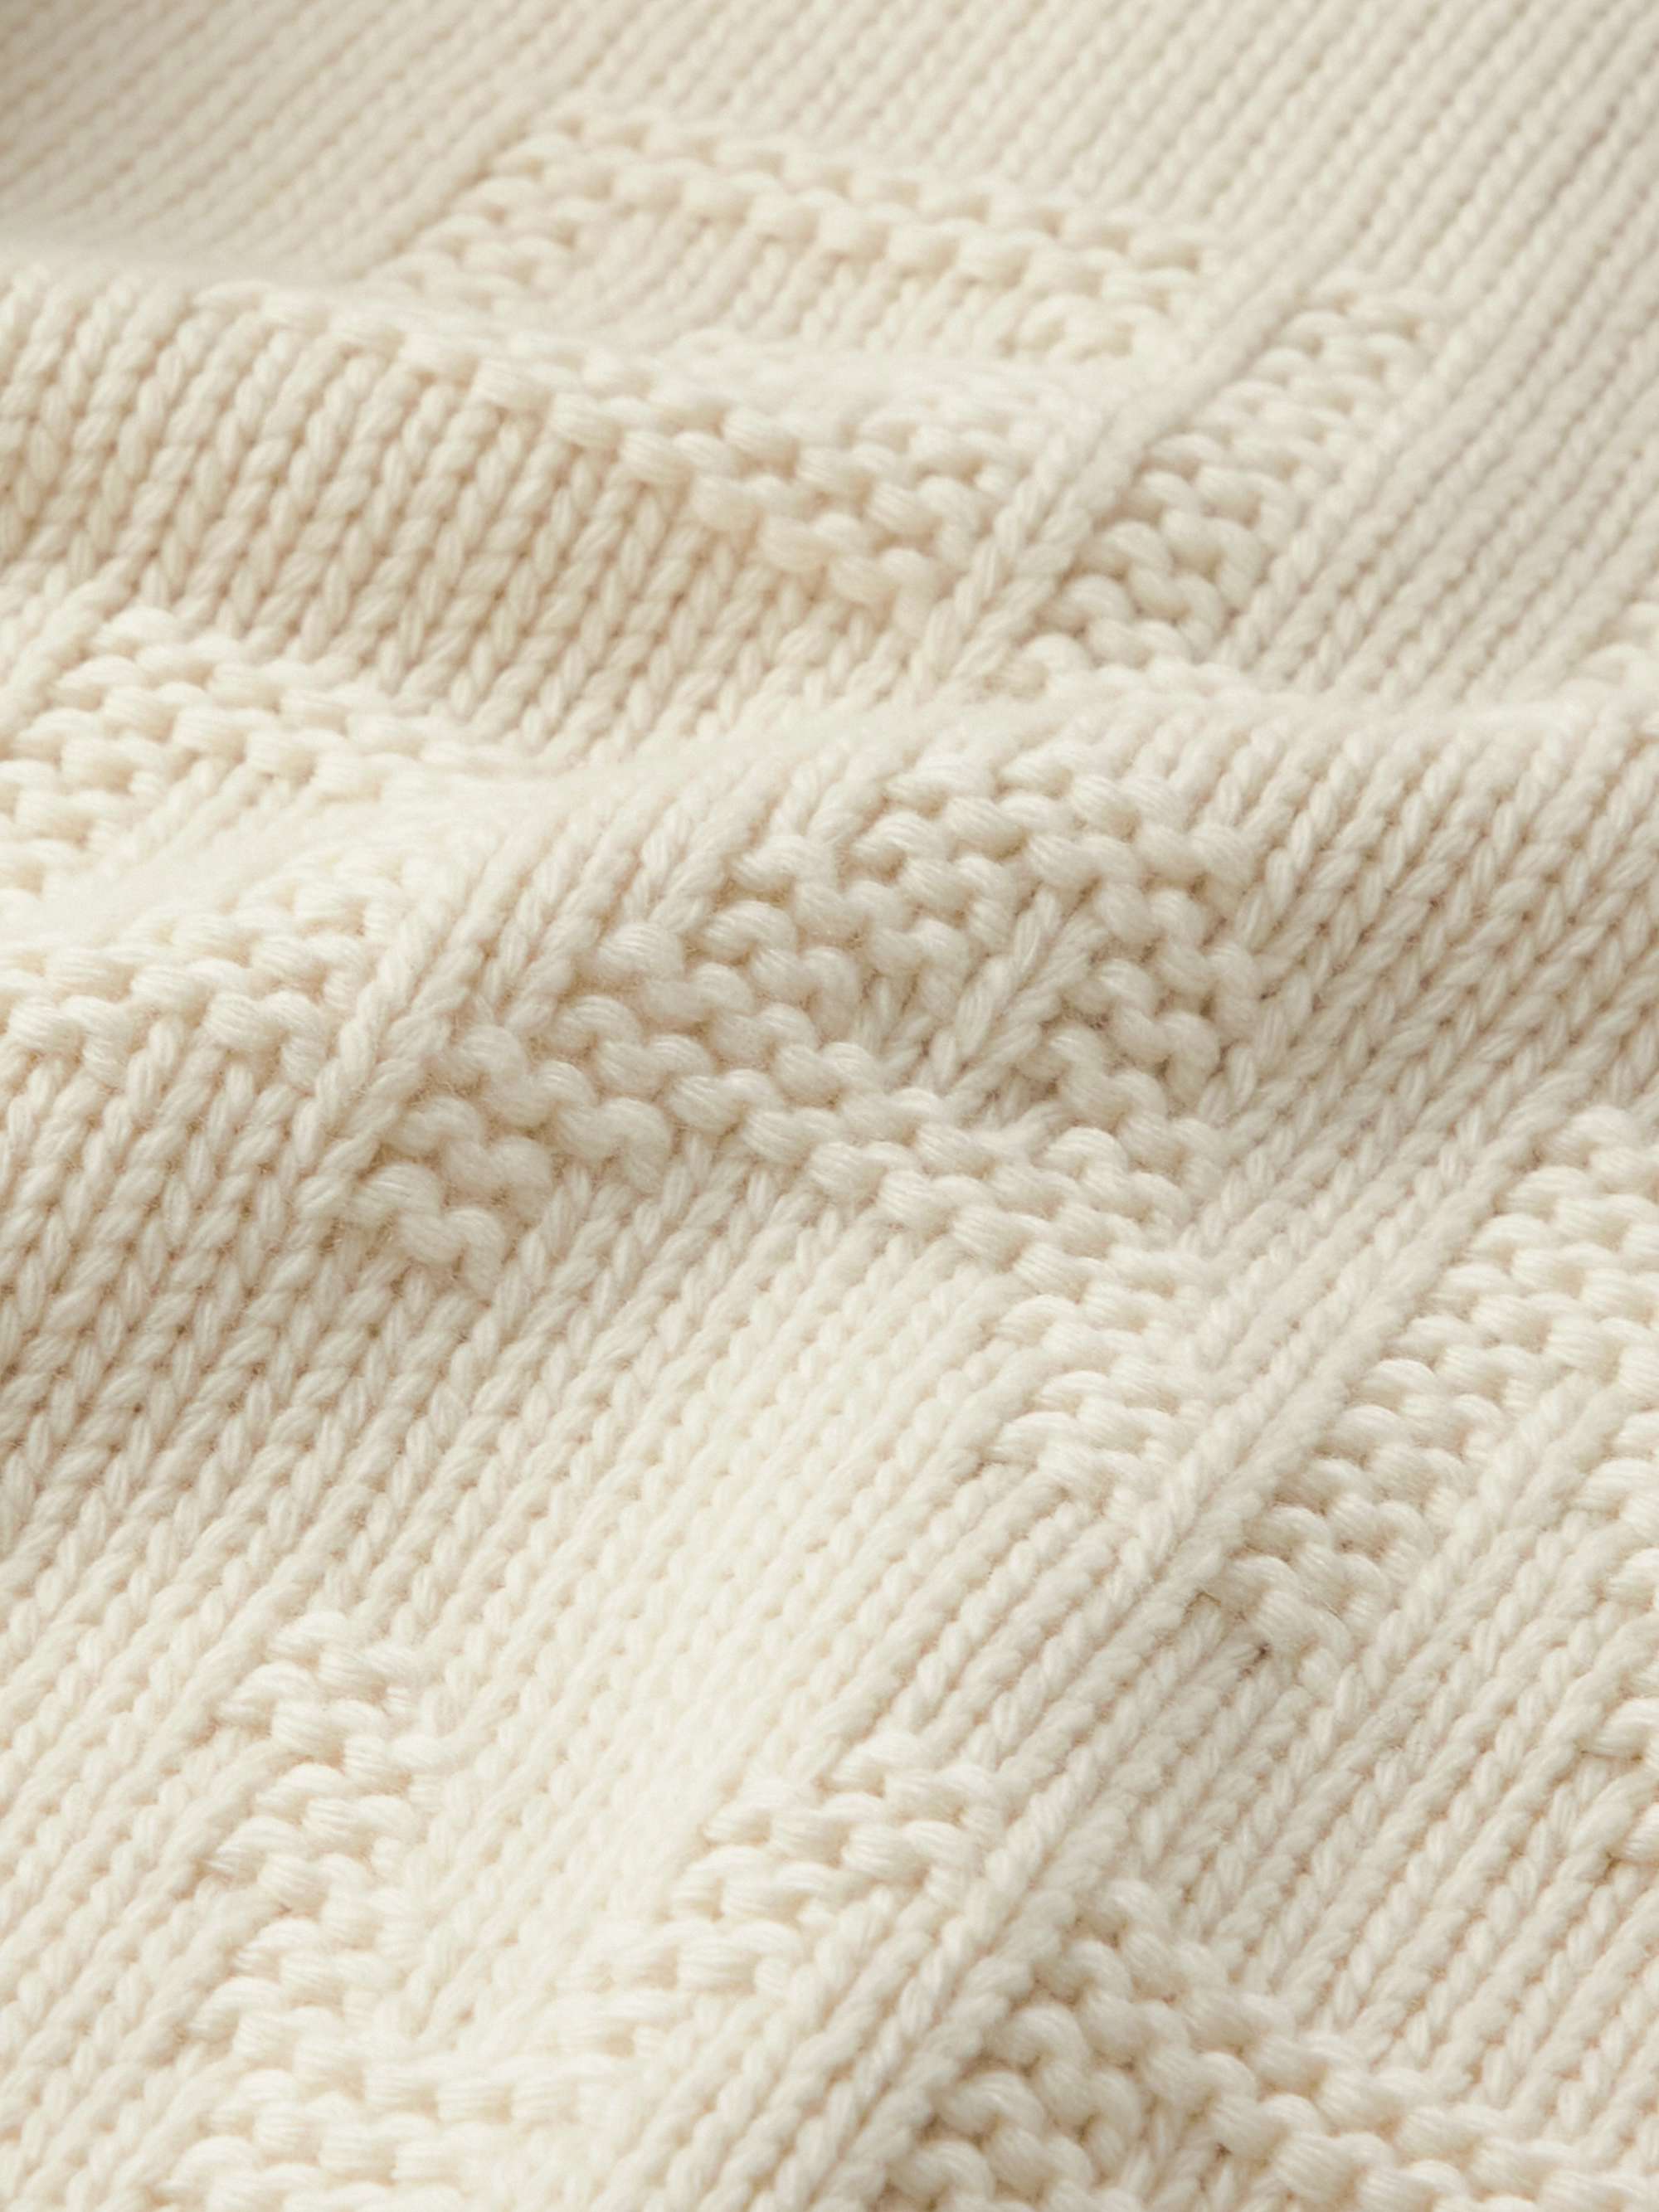 GUCCI Embroidered Wool-Jacquard Cardigan